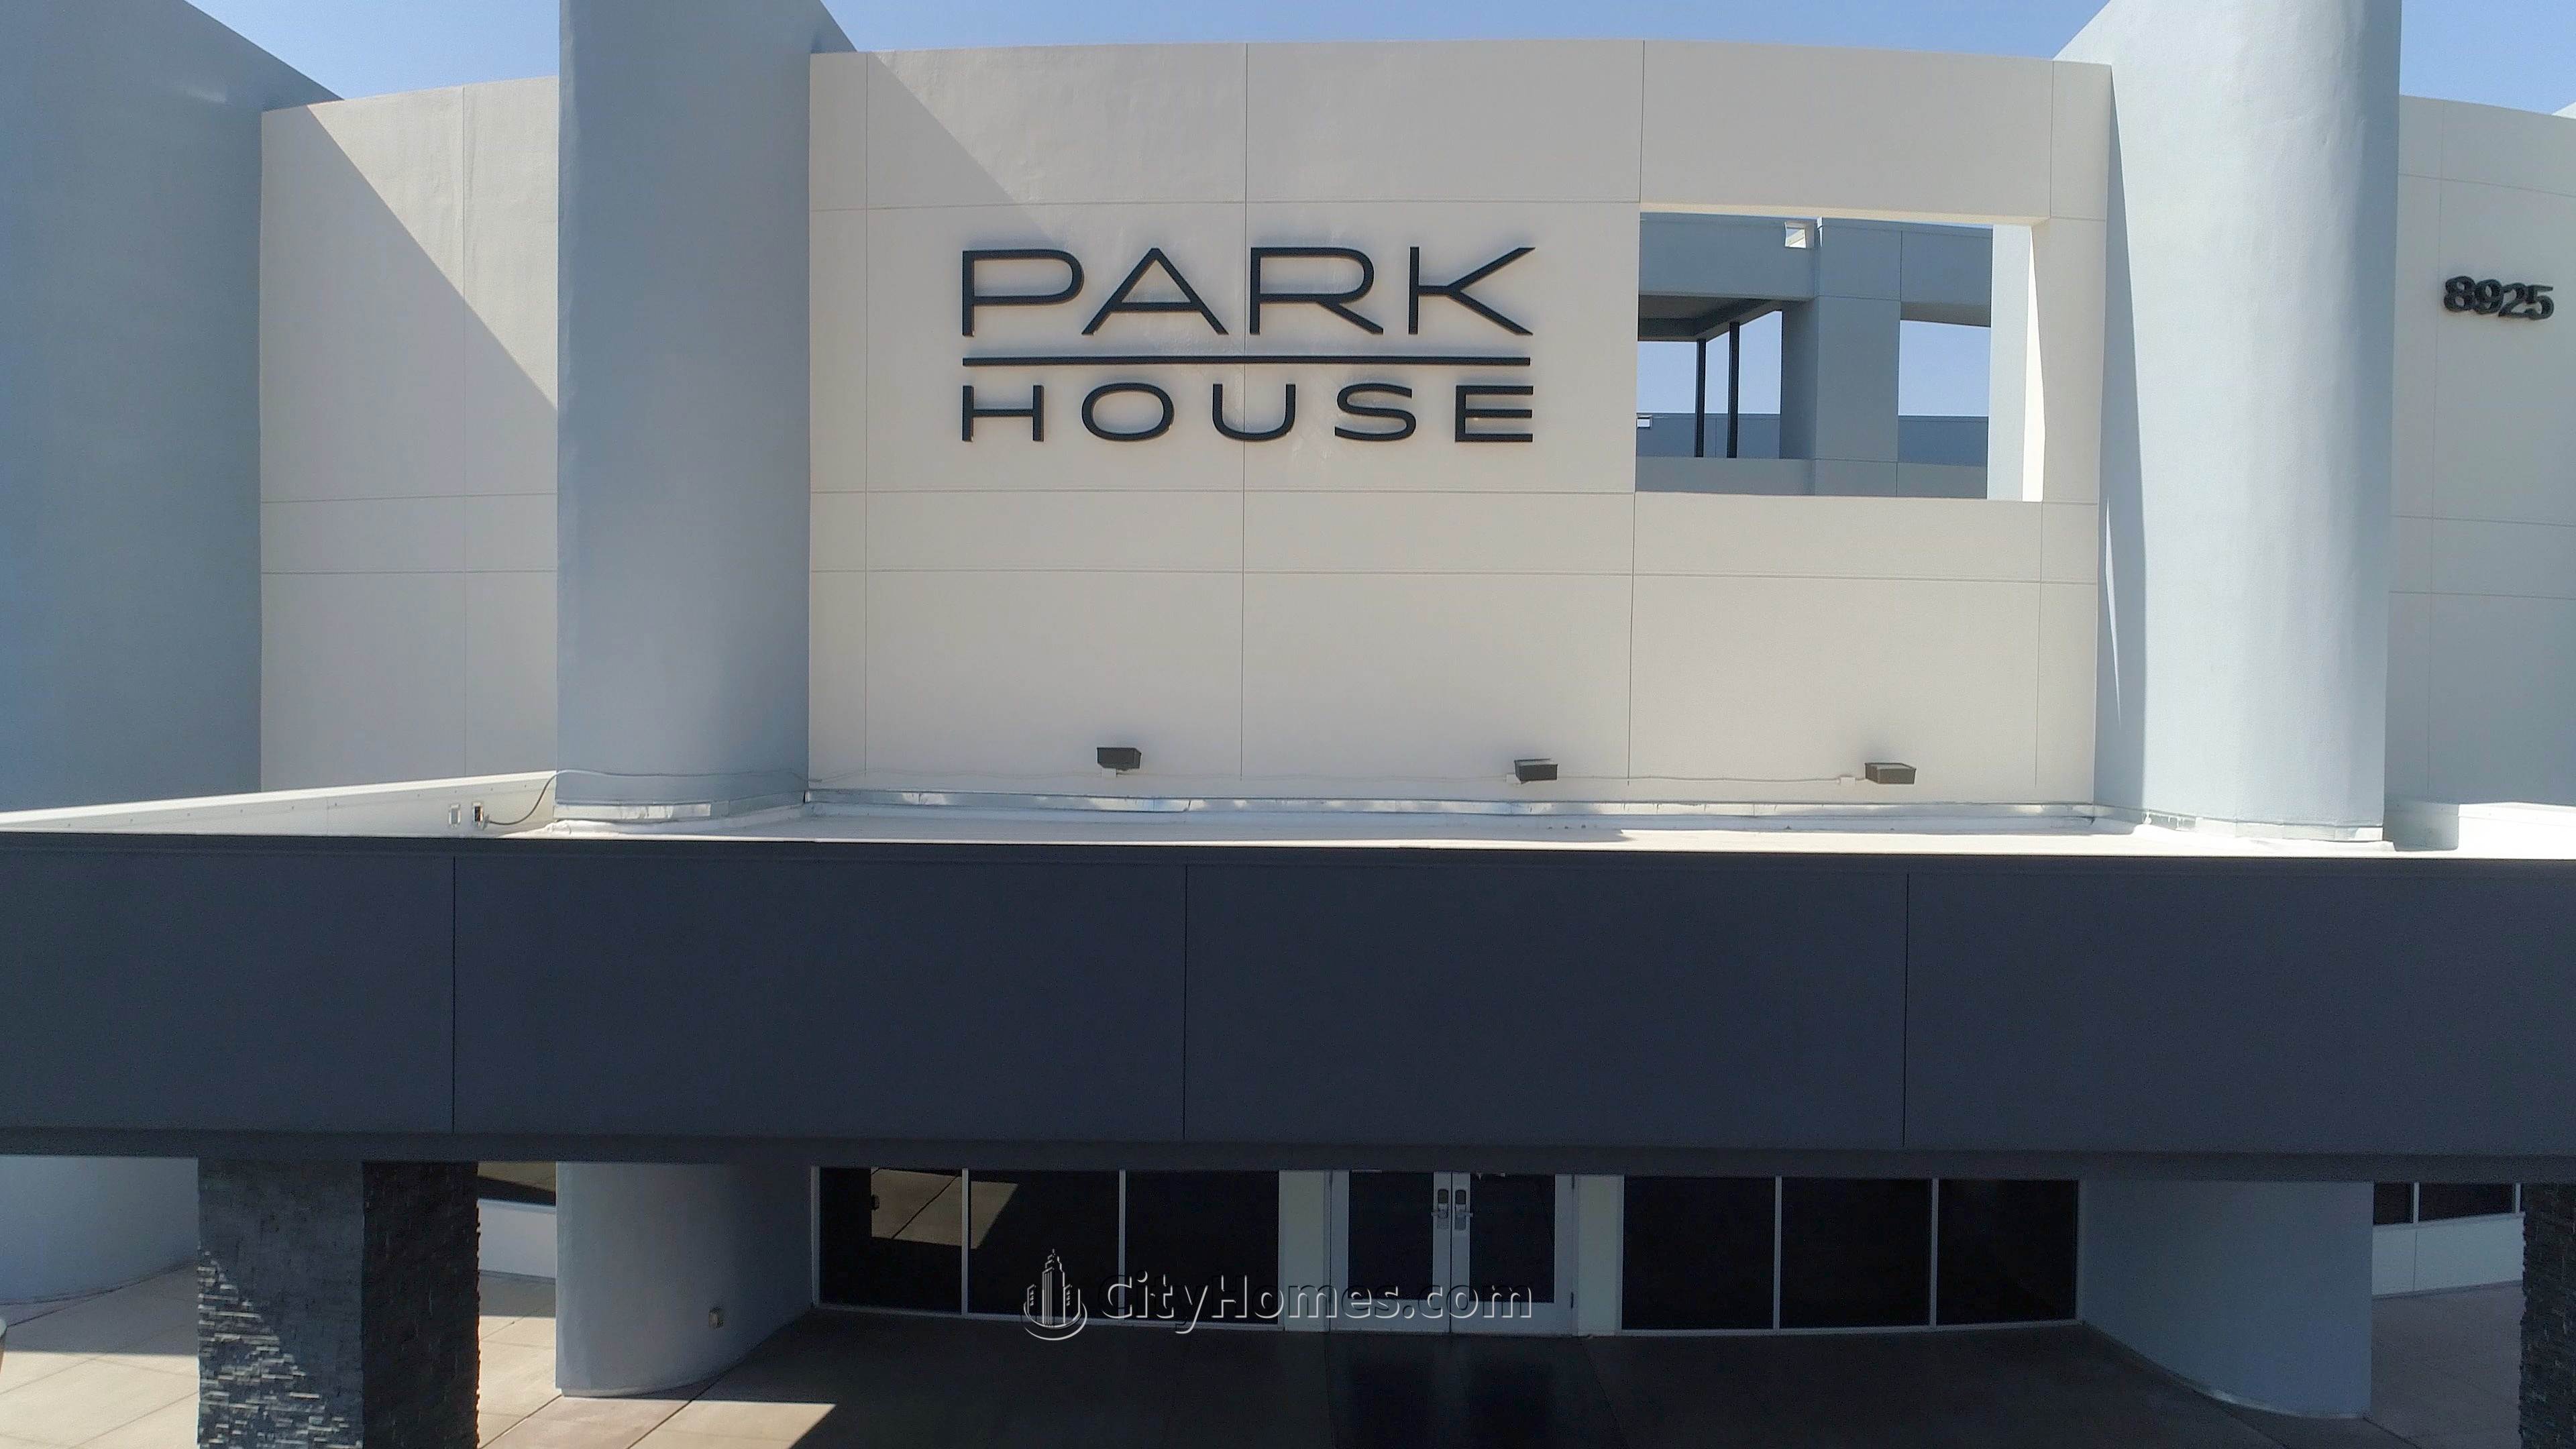 Park House建於 8925 W Flamingo Rd, Las Vegas, NV 89147